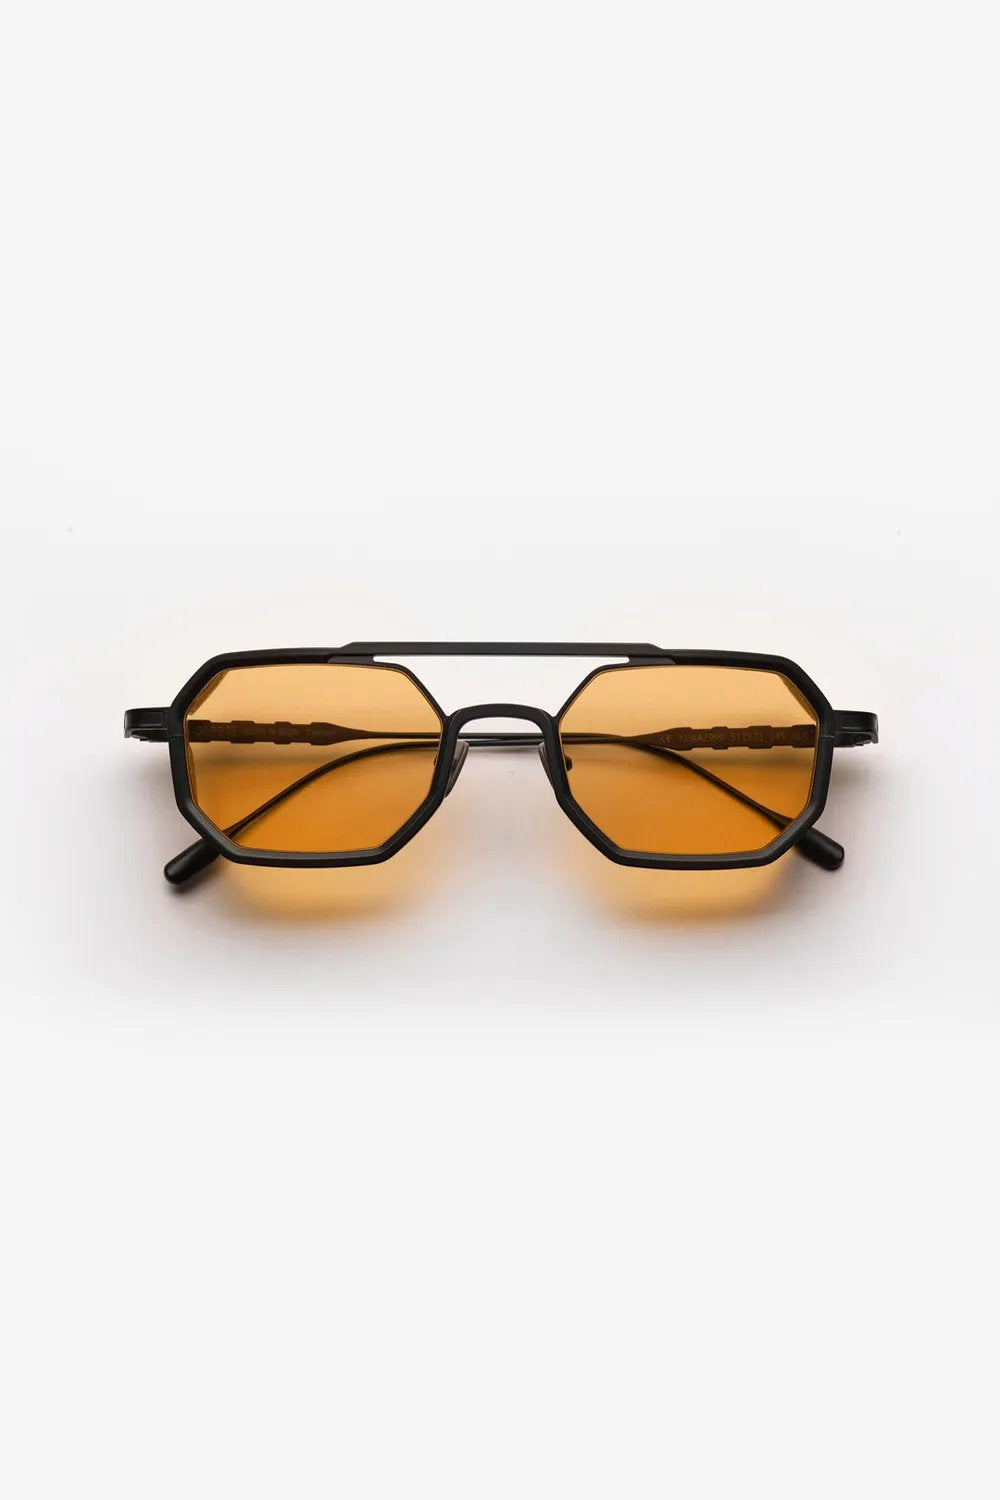 Capote - KENAZ999 Sunglasses Capote Orange ONES 